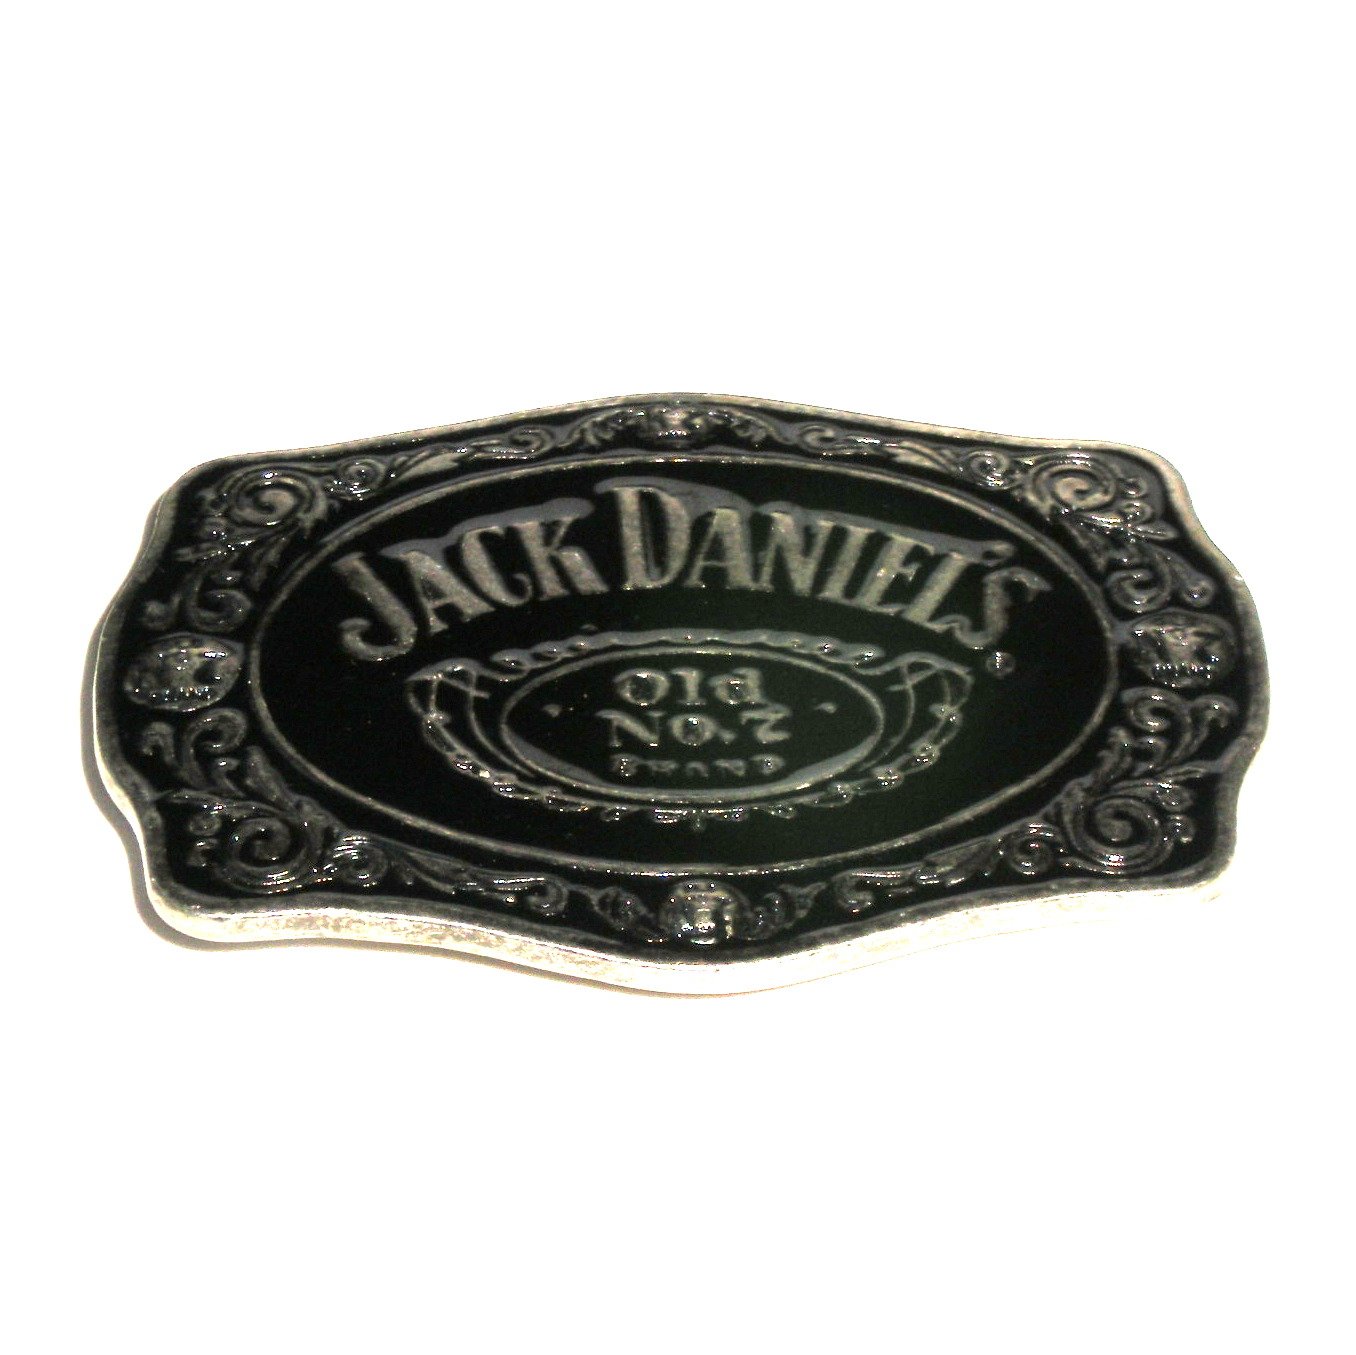 Jack Daniels Whiskey Old No 7 Brand 2005 Pewter Belt Buckle